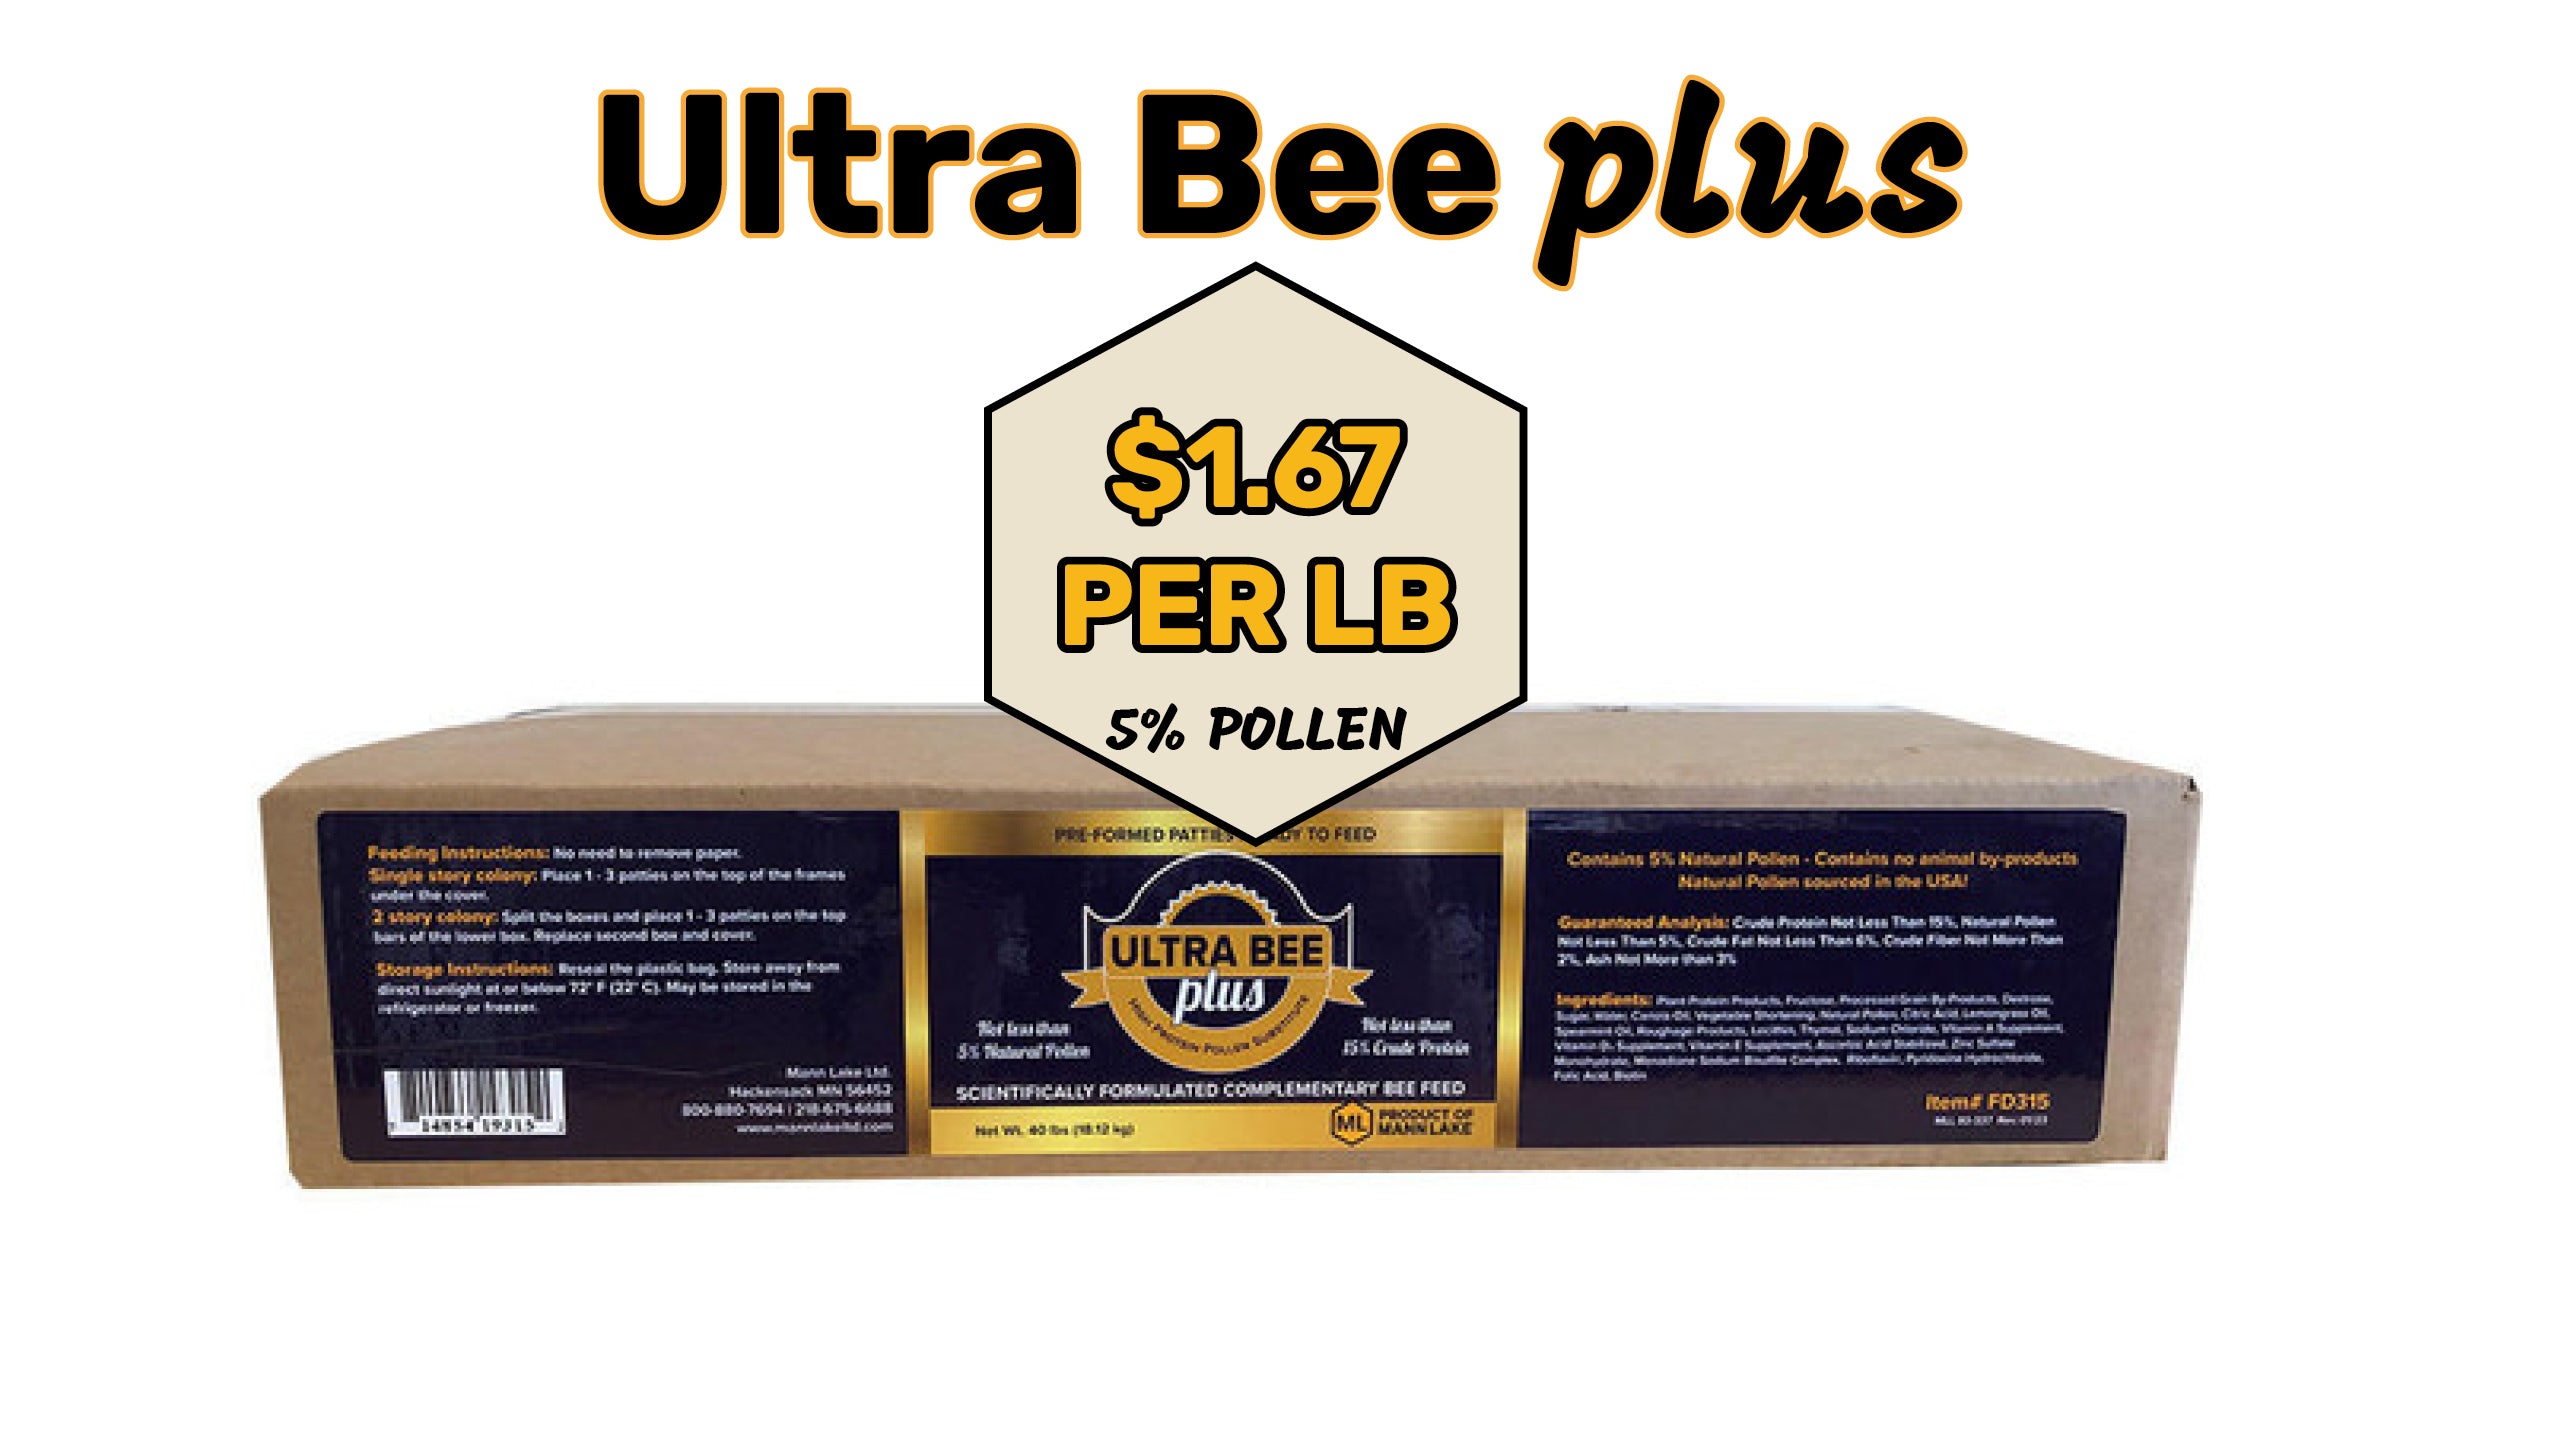 Ultrabee Plus pollen patties